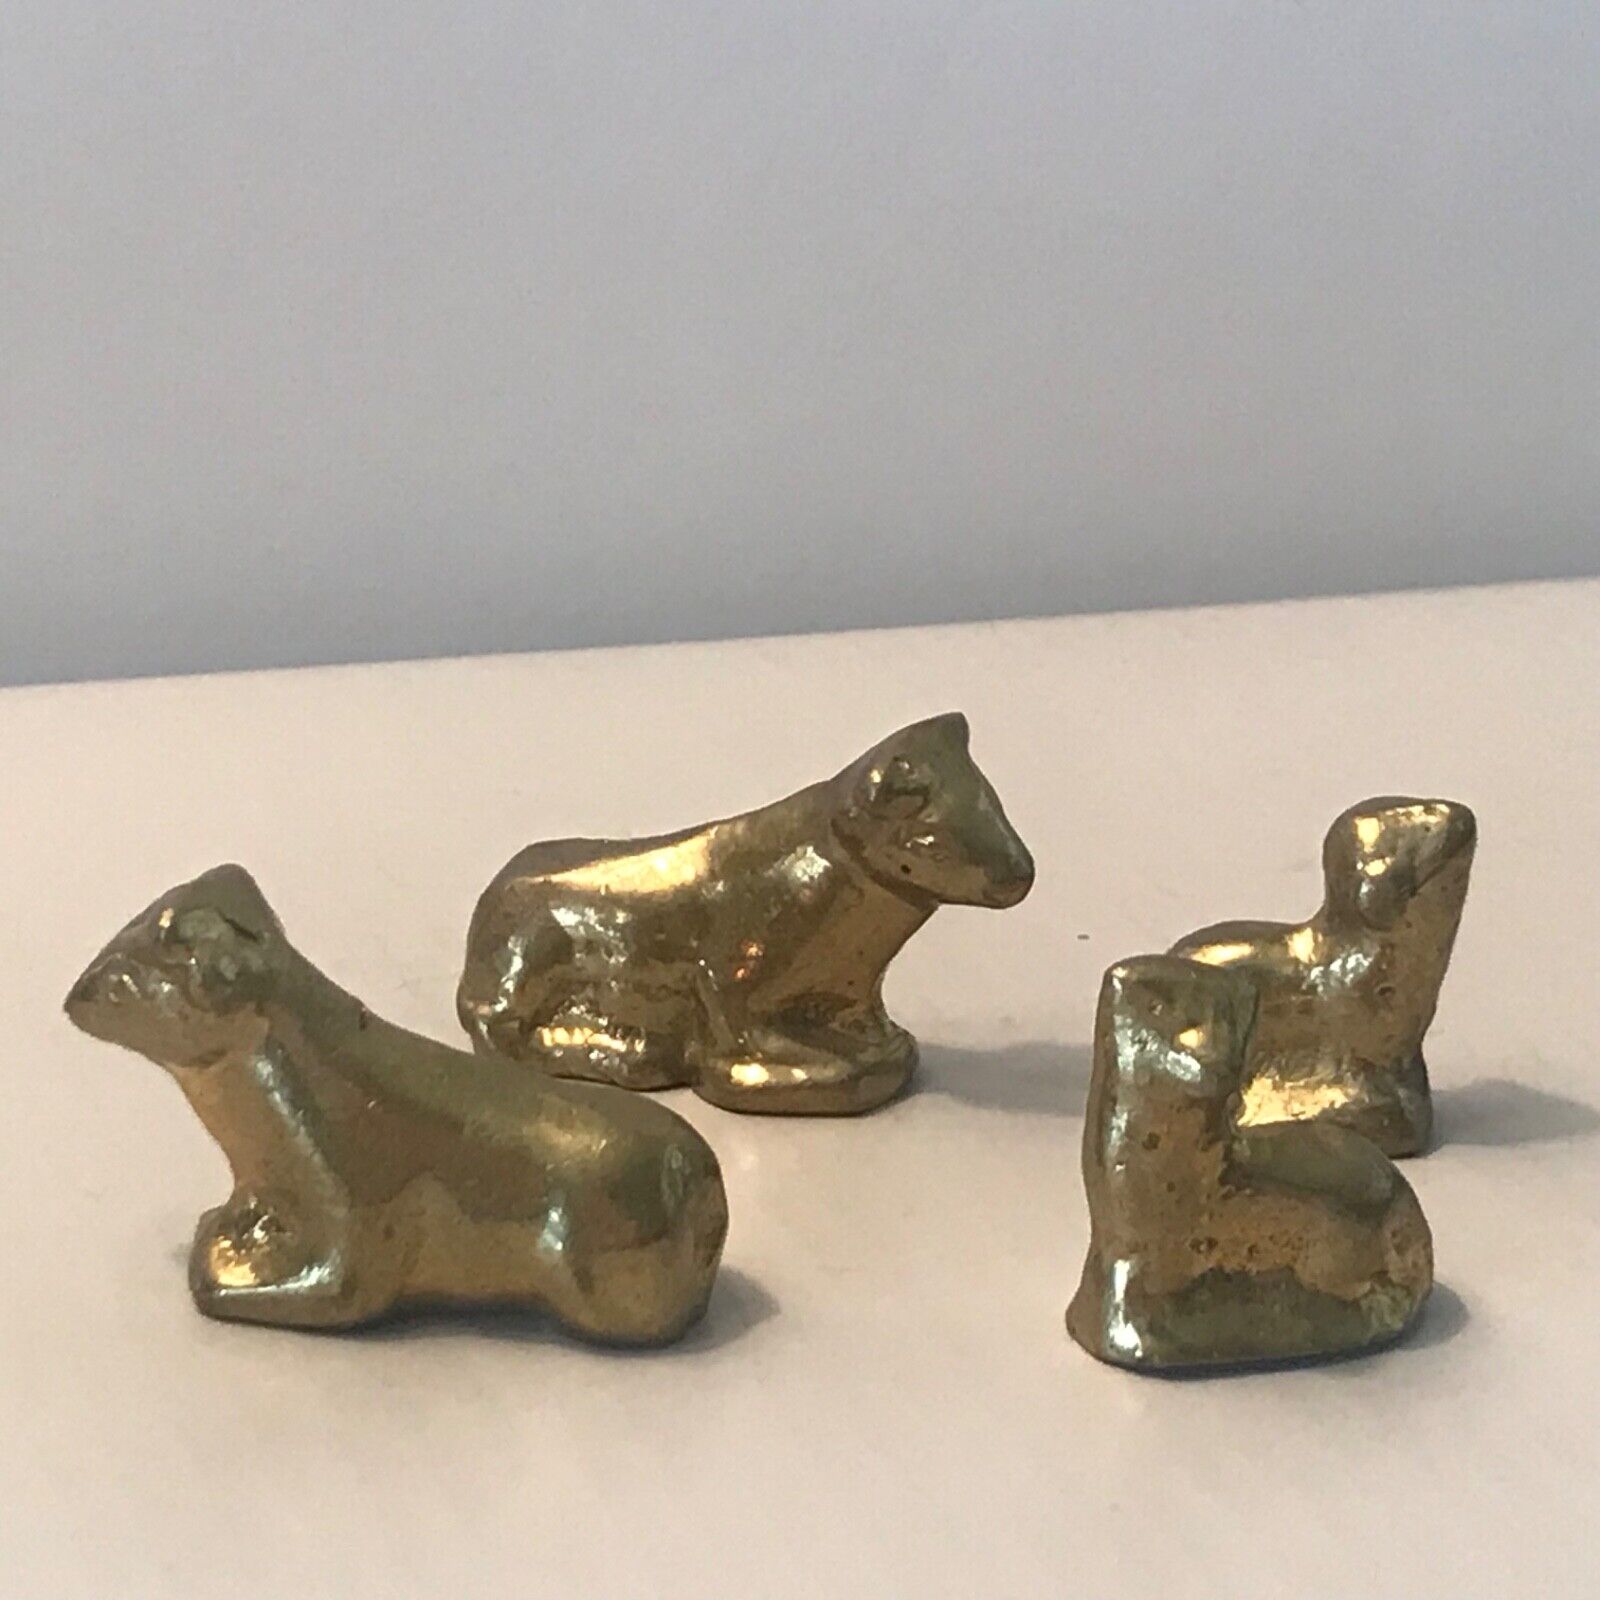 Vintage Brass Animal Figures Lot of 4 Miniature Sheep/Goat